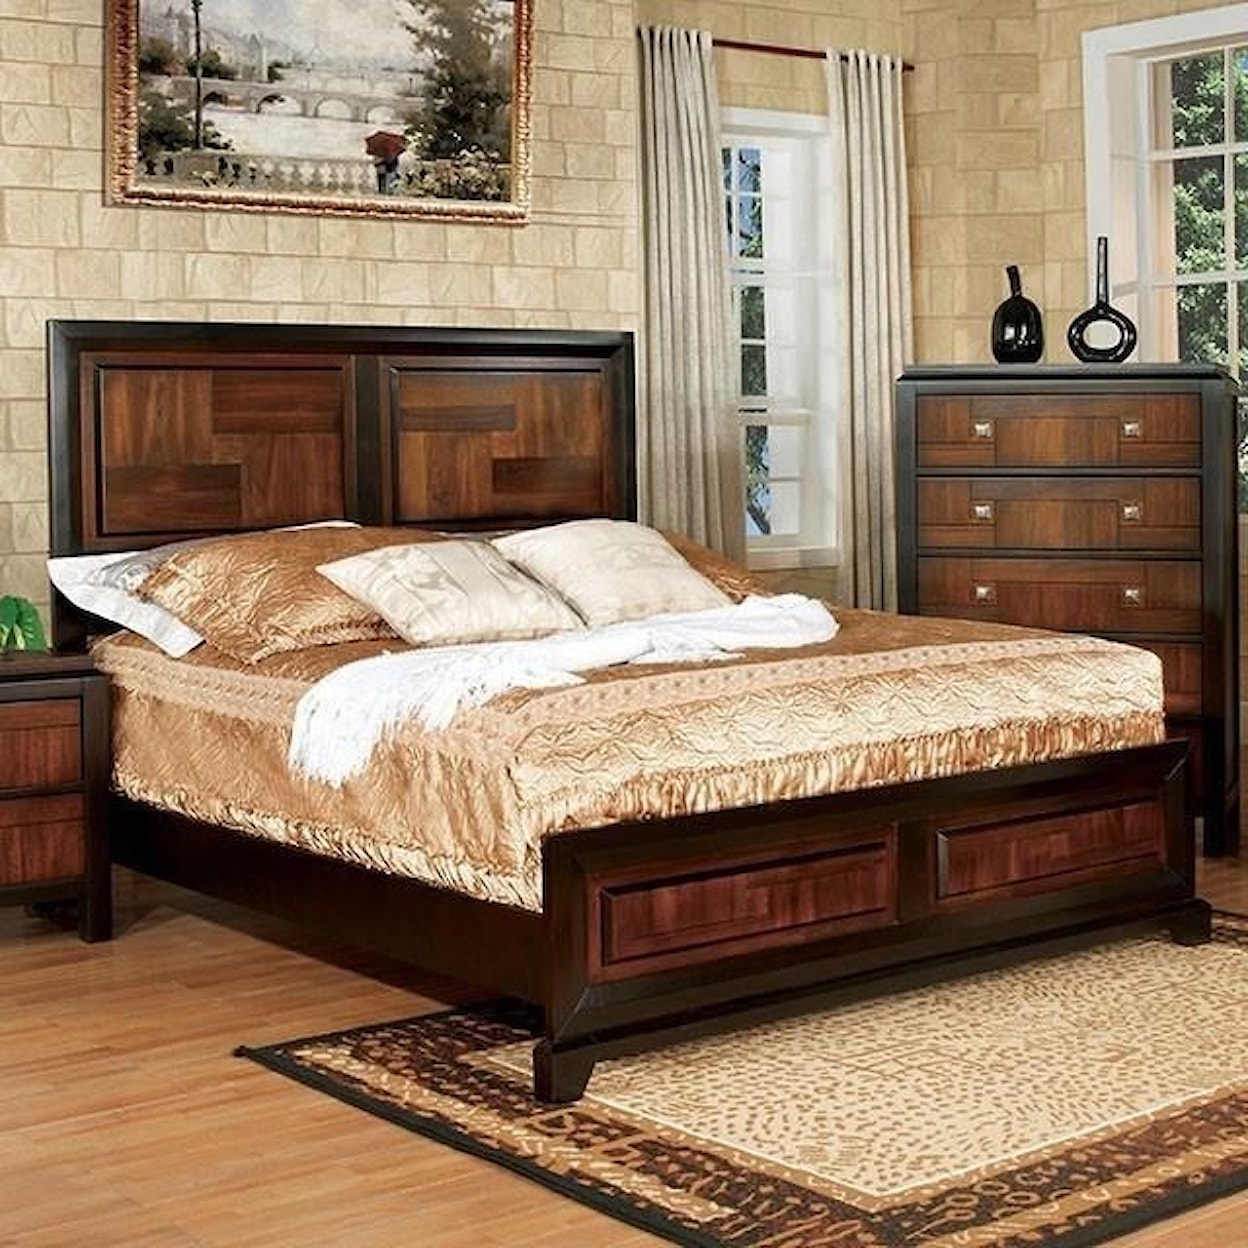 Furniture of America Patra Queen Bed